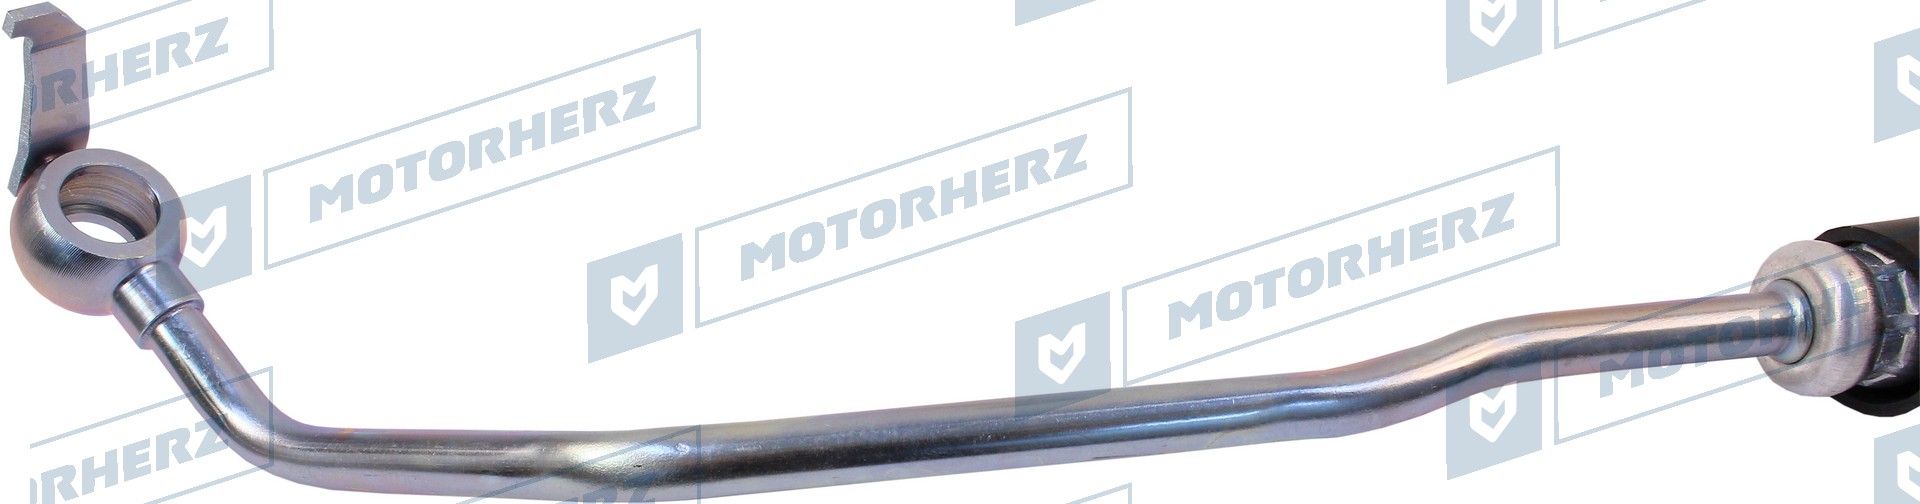 Шланг напорный от насоса к рейке MITSUBISHI LANCER CX,CY 2007-2017 HPH0107 Motorherz